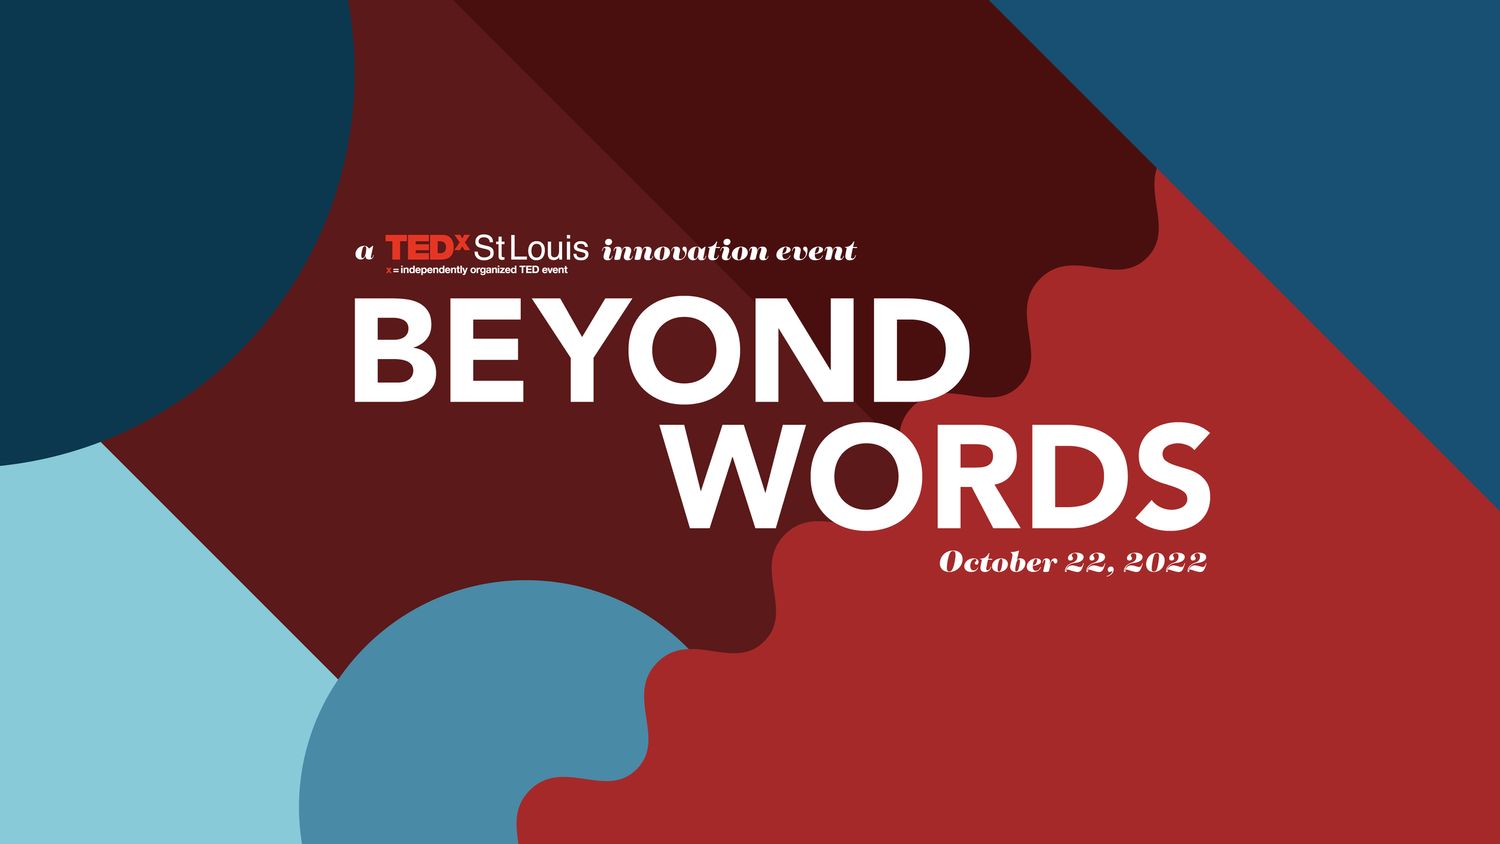 TEDxStLouis presents "Beyond Words" Oct. 22, 5-9:30 PM at the Kirkwood Performing Arts Center, Kirkwood, Missouri, United States